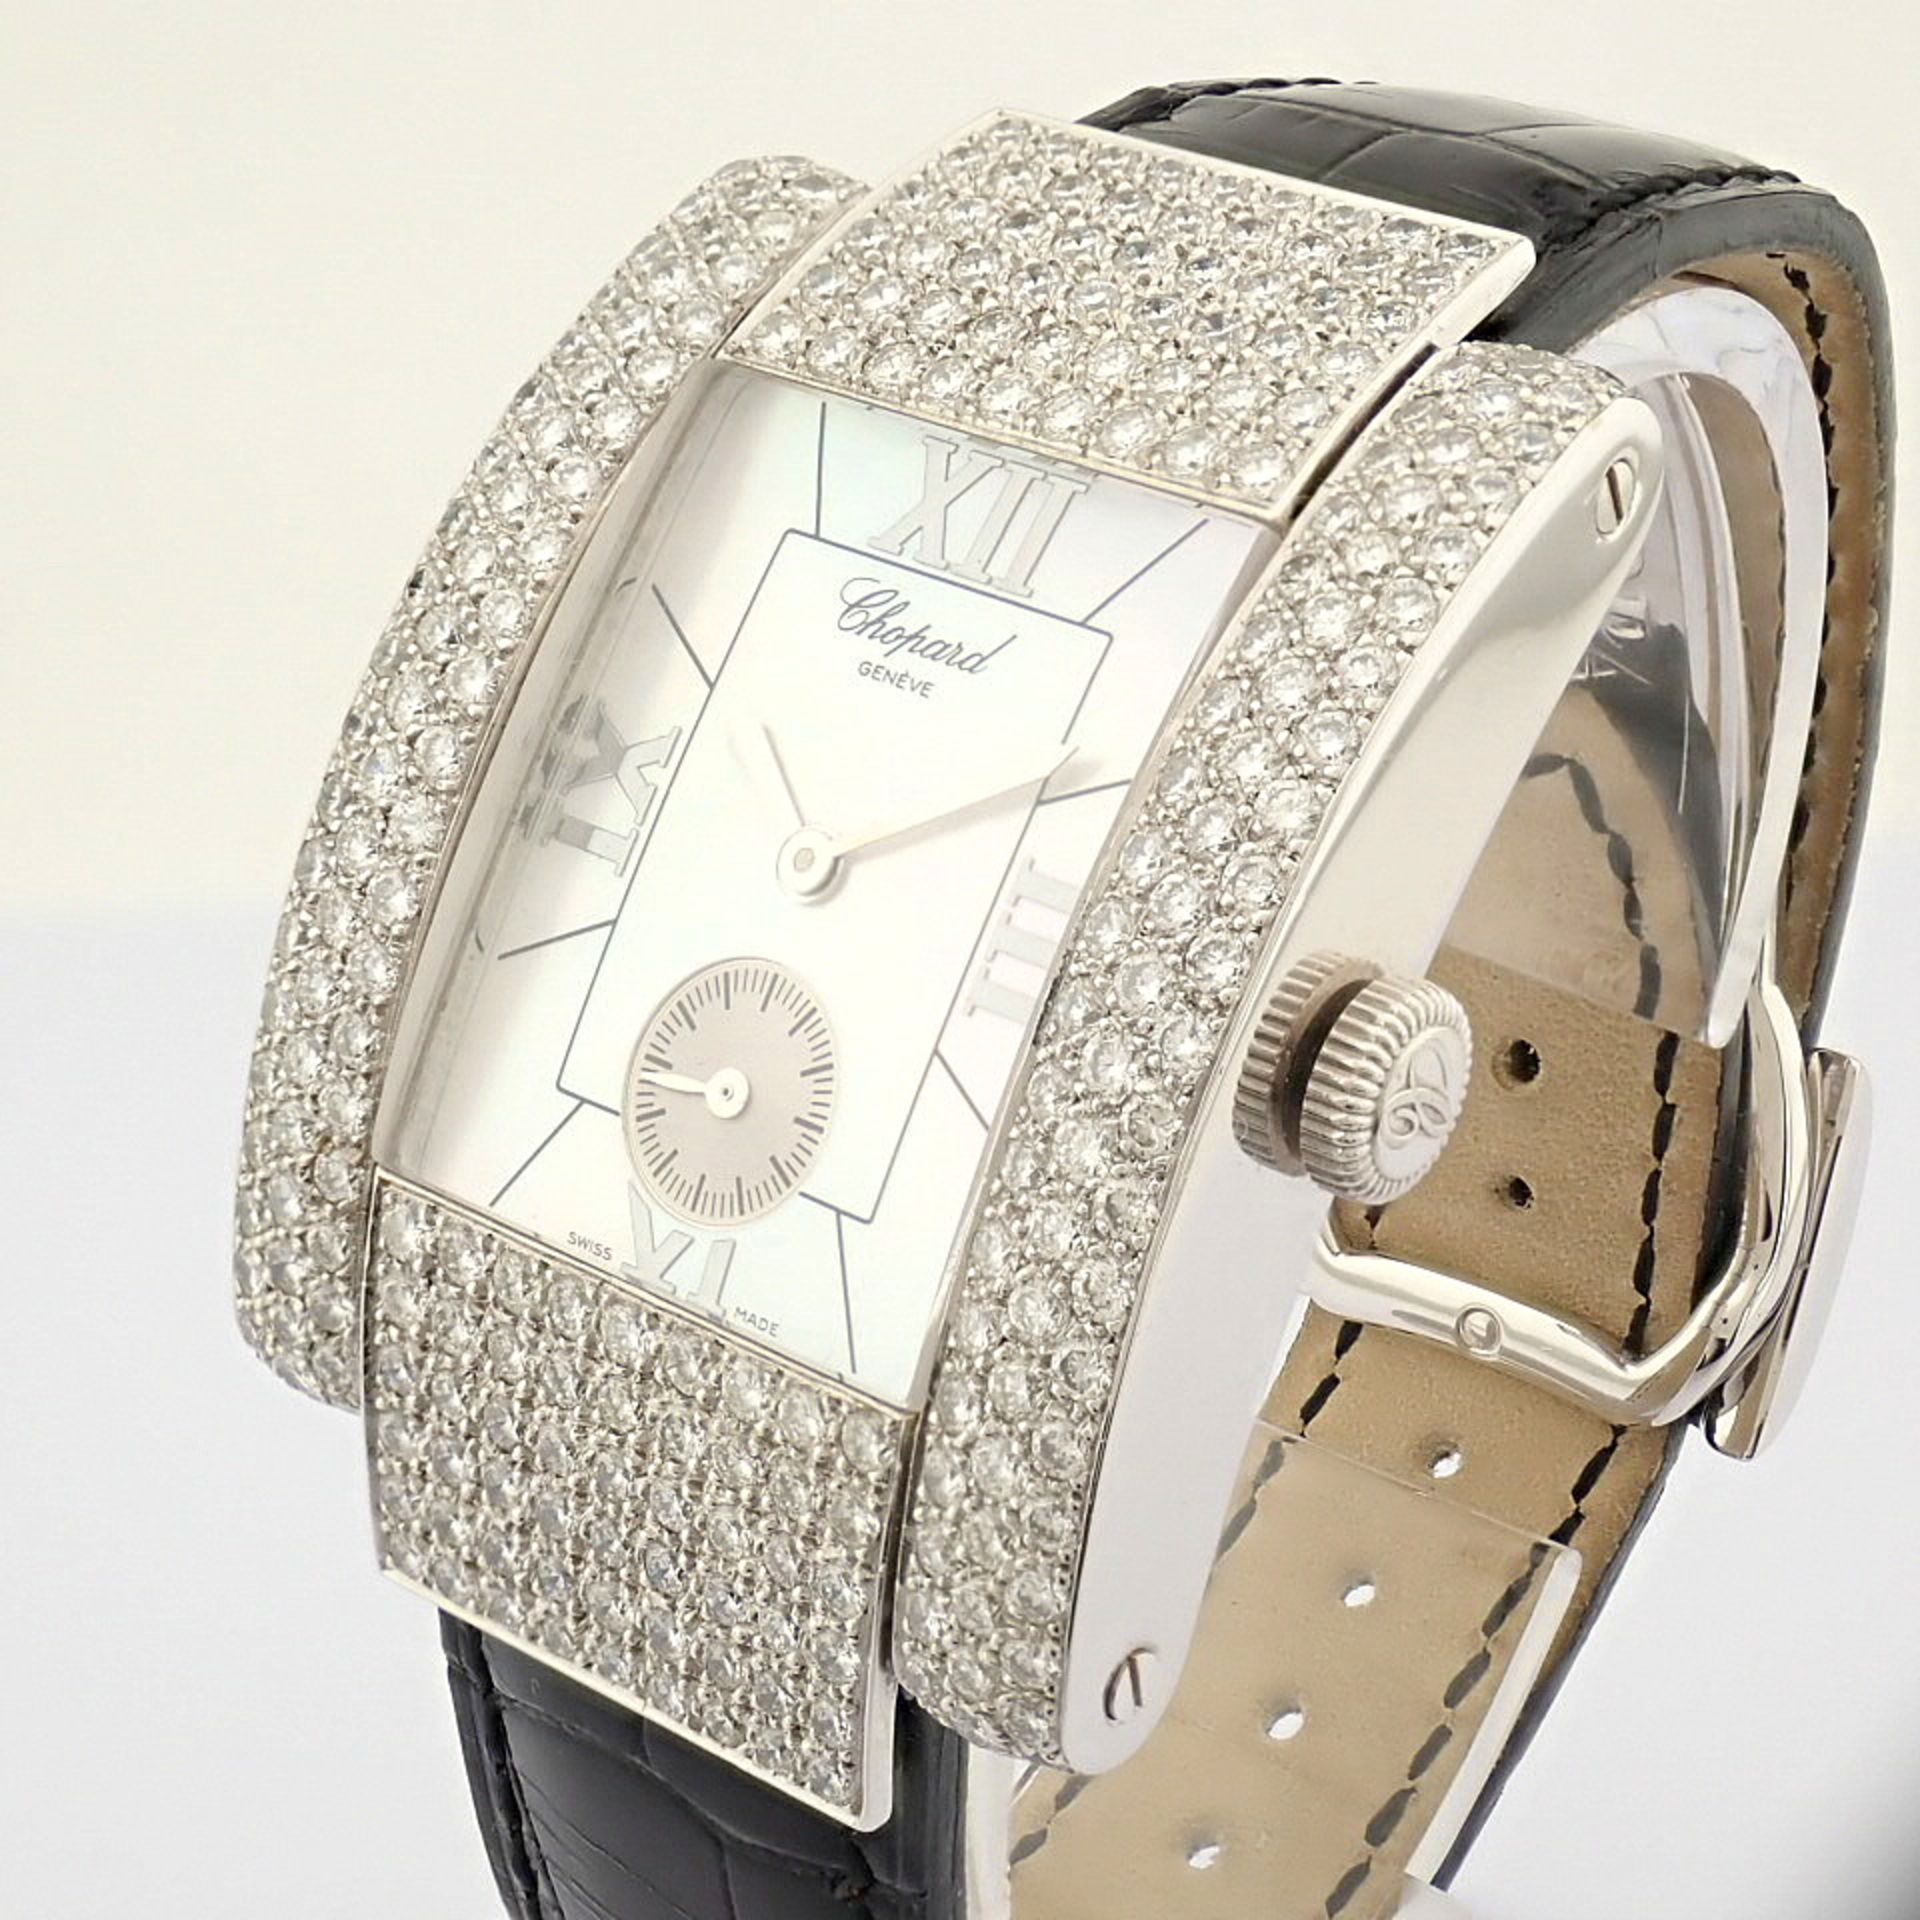 Chopard / La Strada - Lady's 18K White Gold Wrist Watch - Image 3 of 13